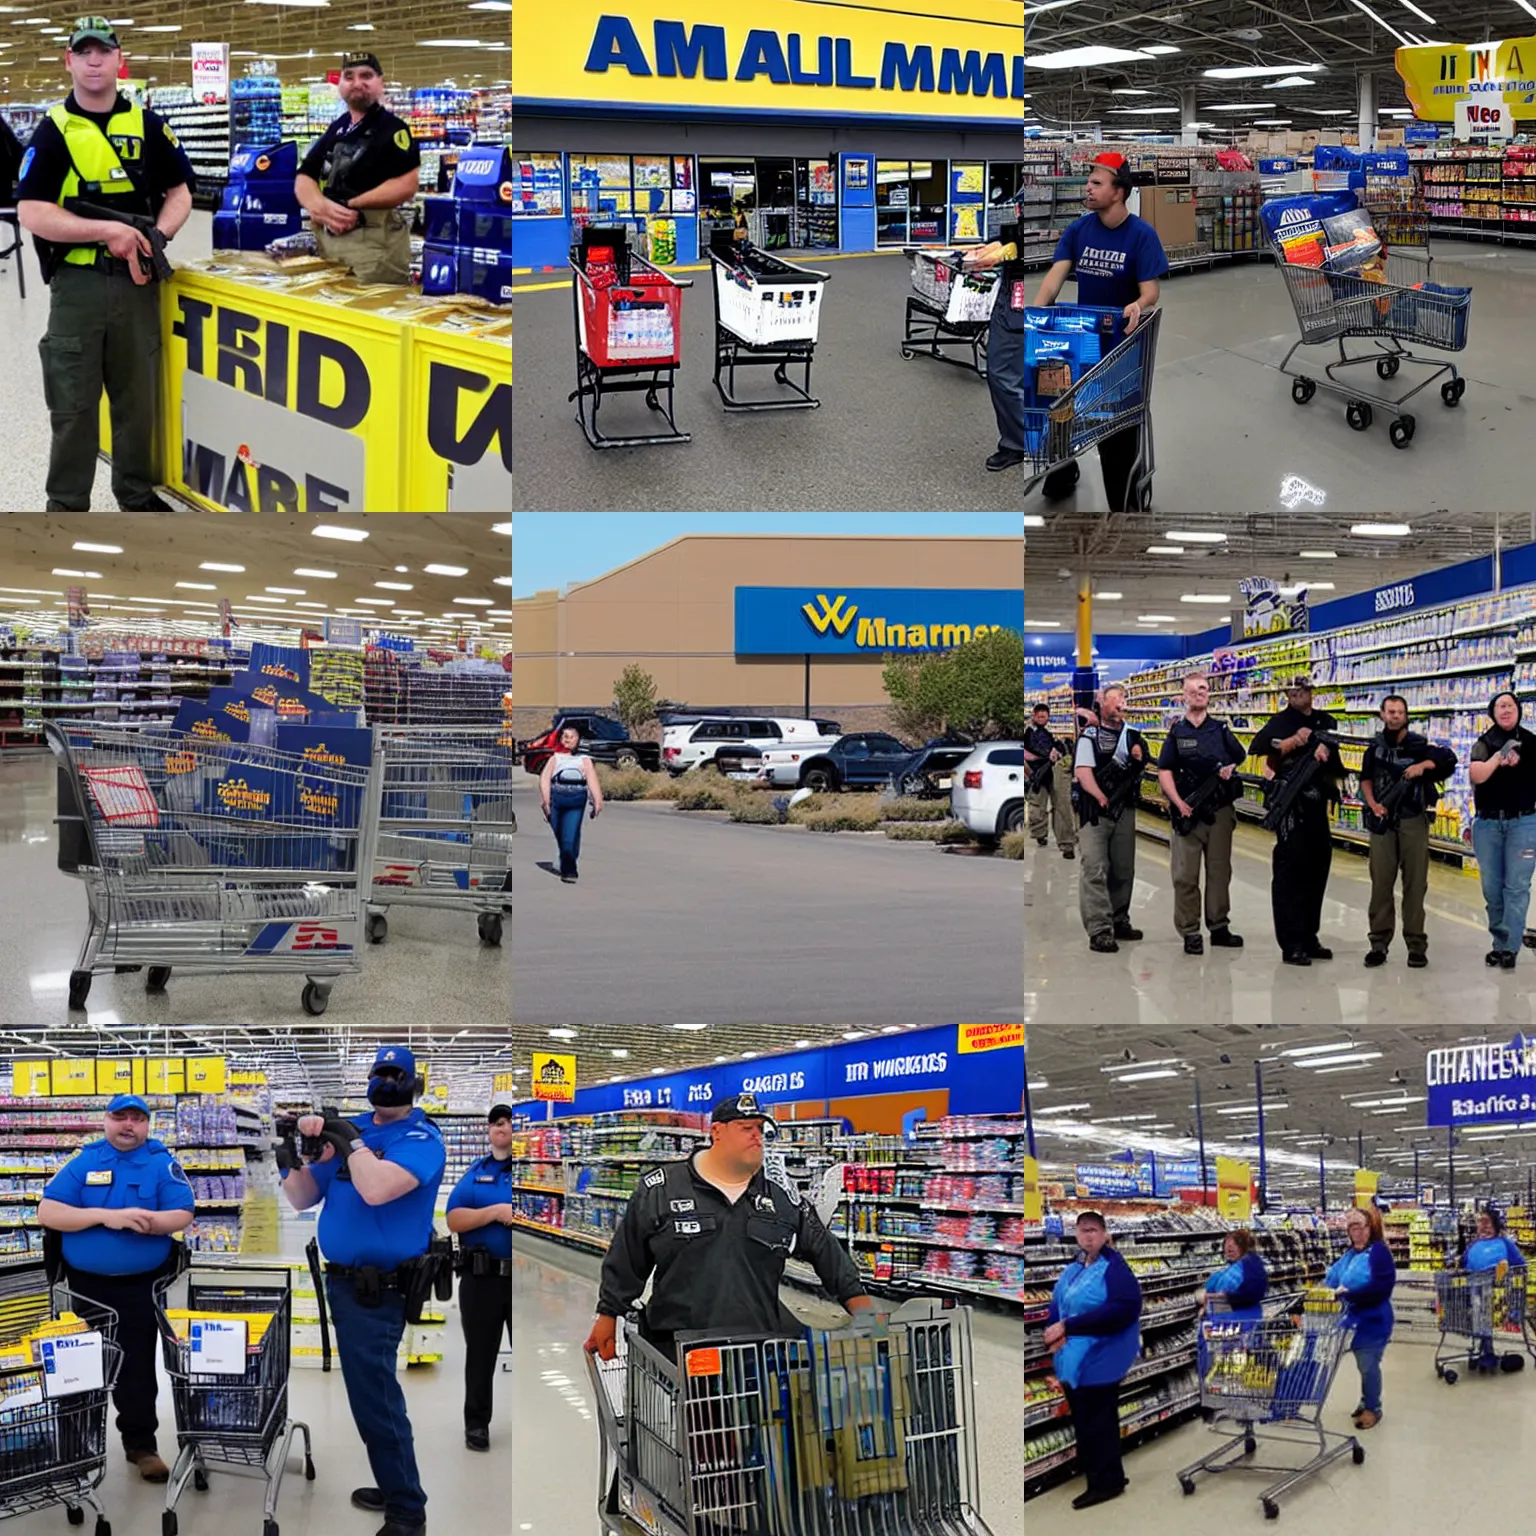 Prompt: armed Walmart employees